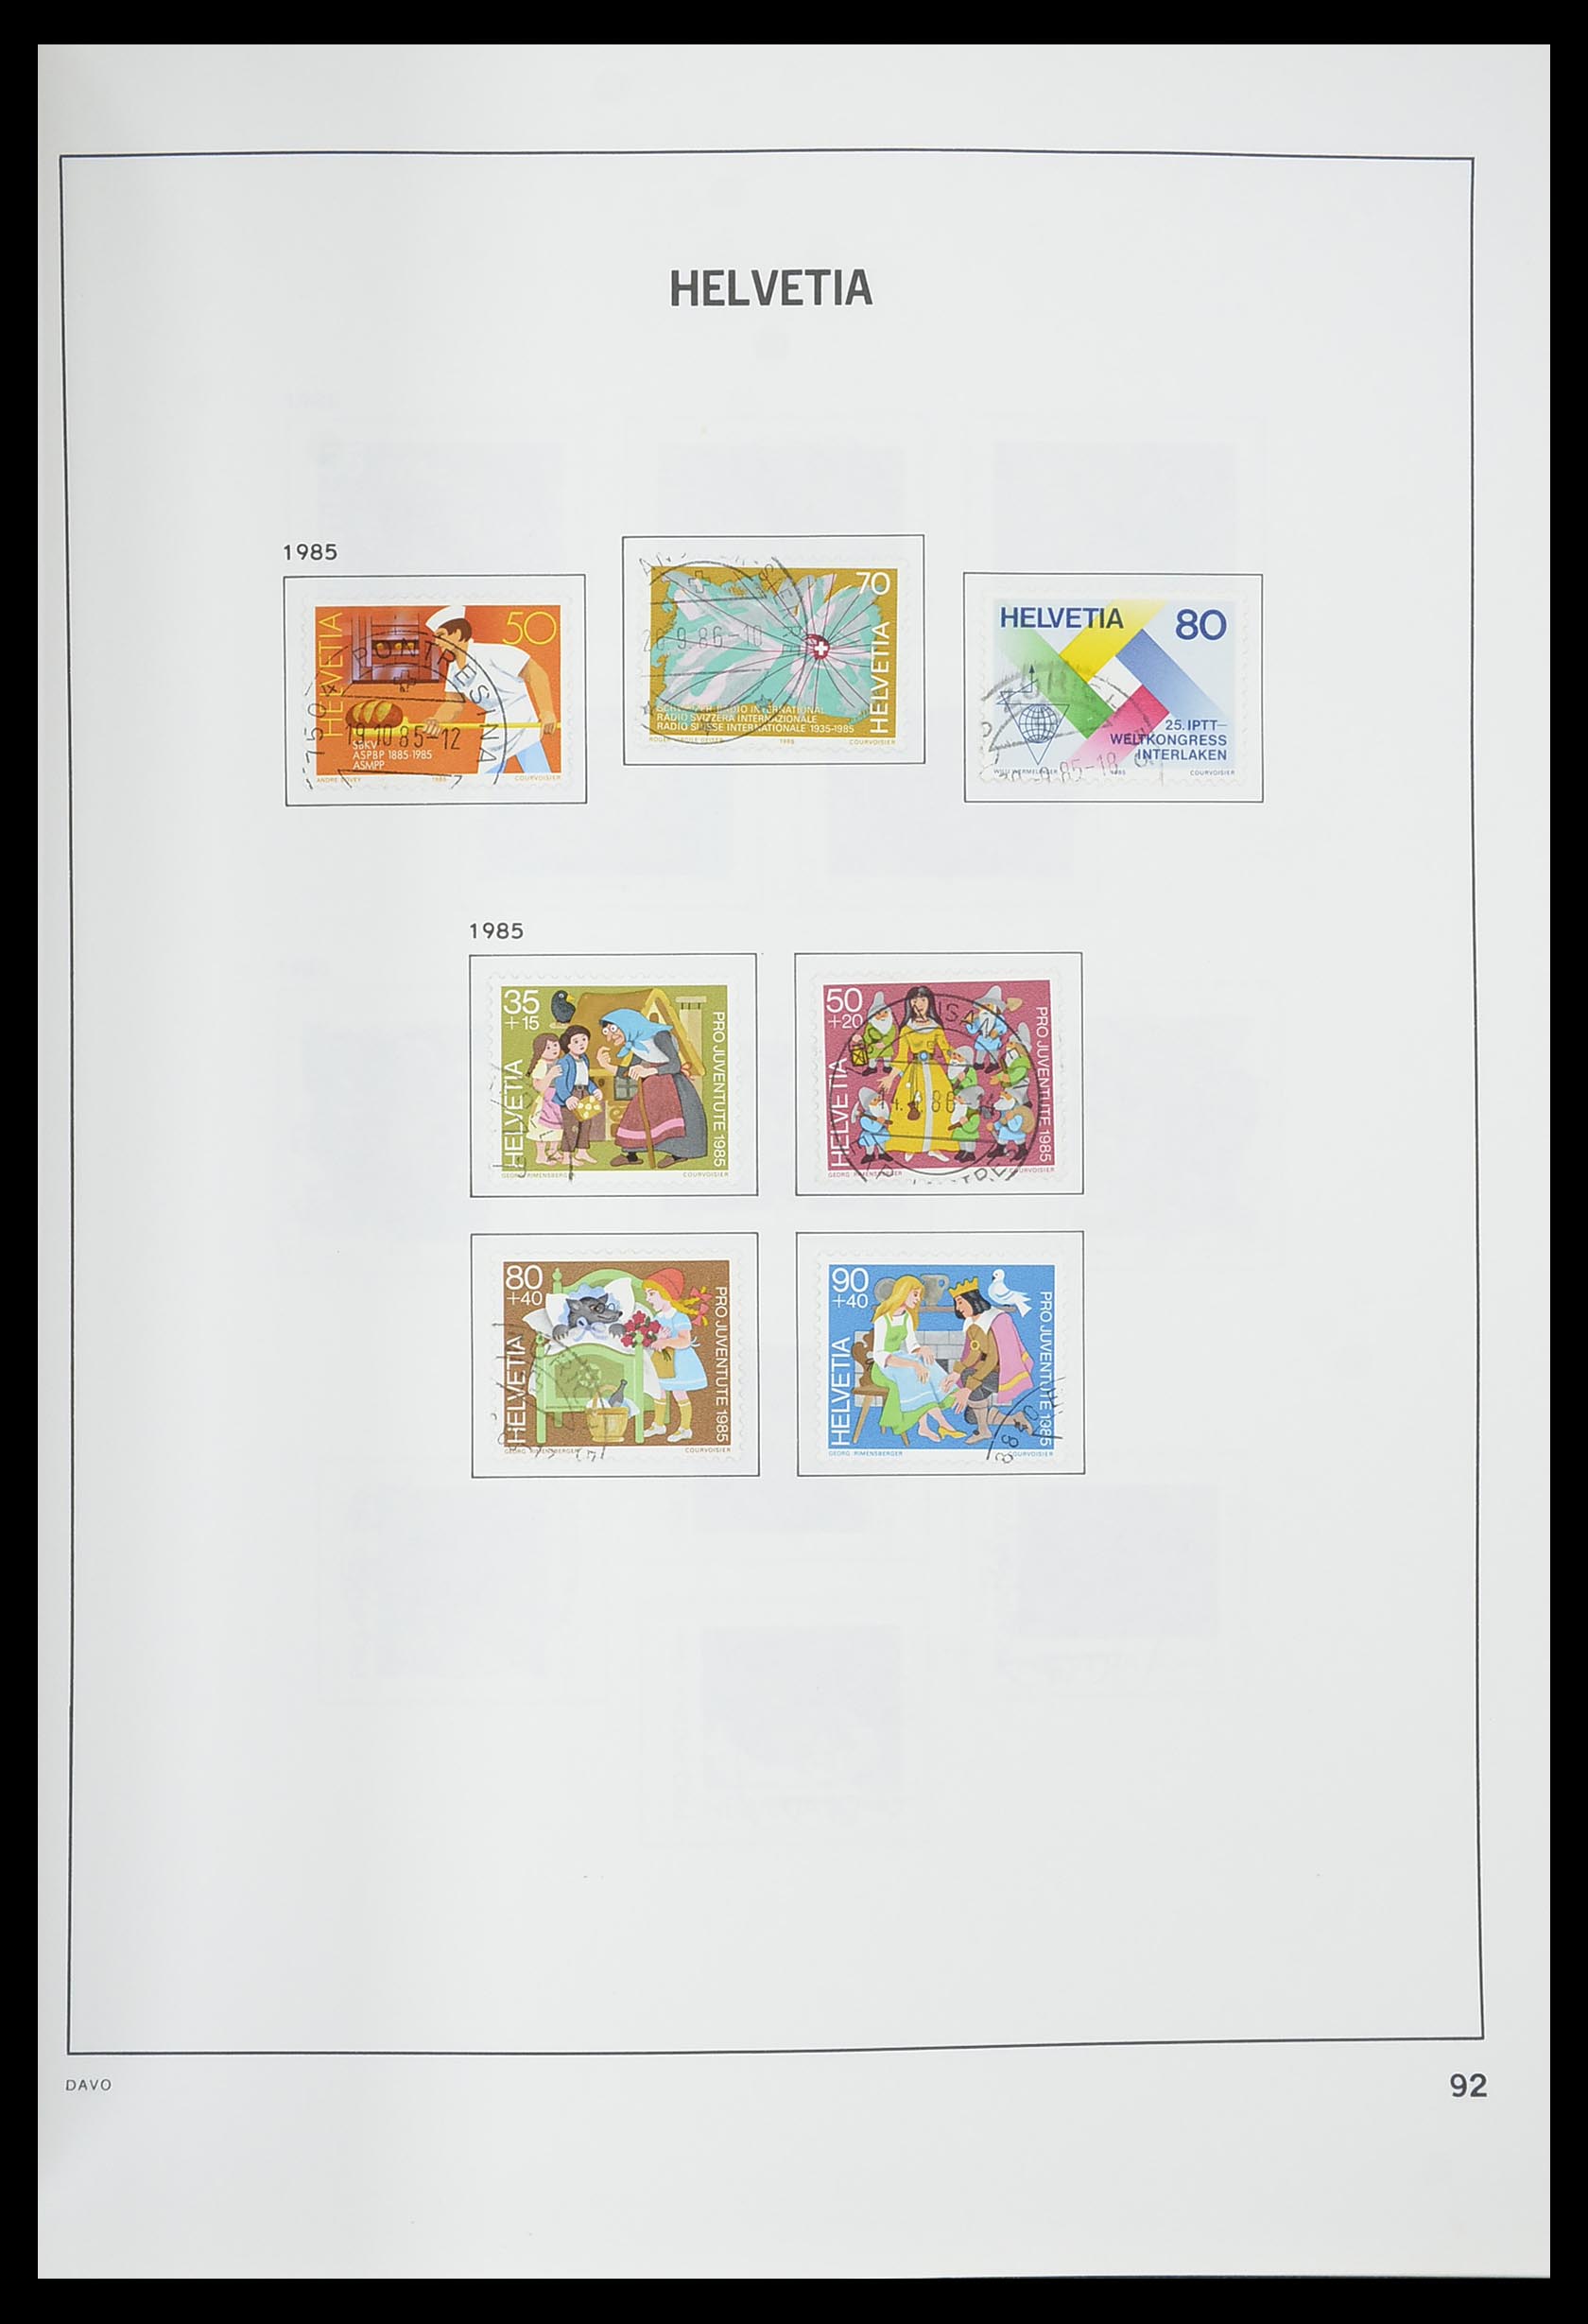 33559 093 - Stamp collection 33559 Switzerland 1850-2000.